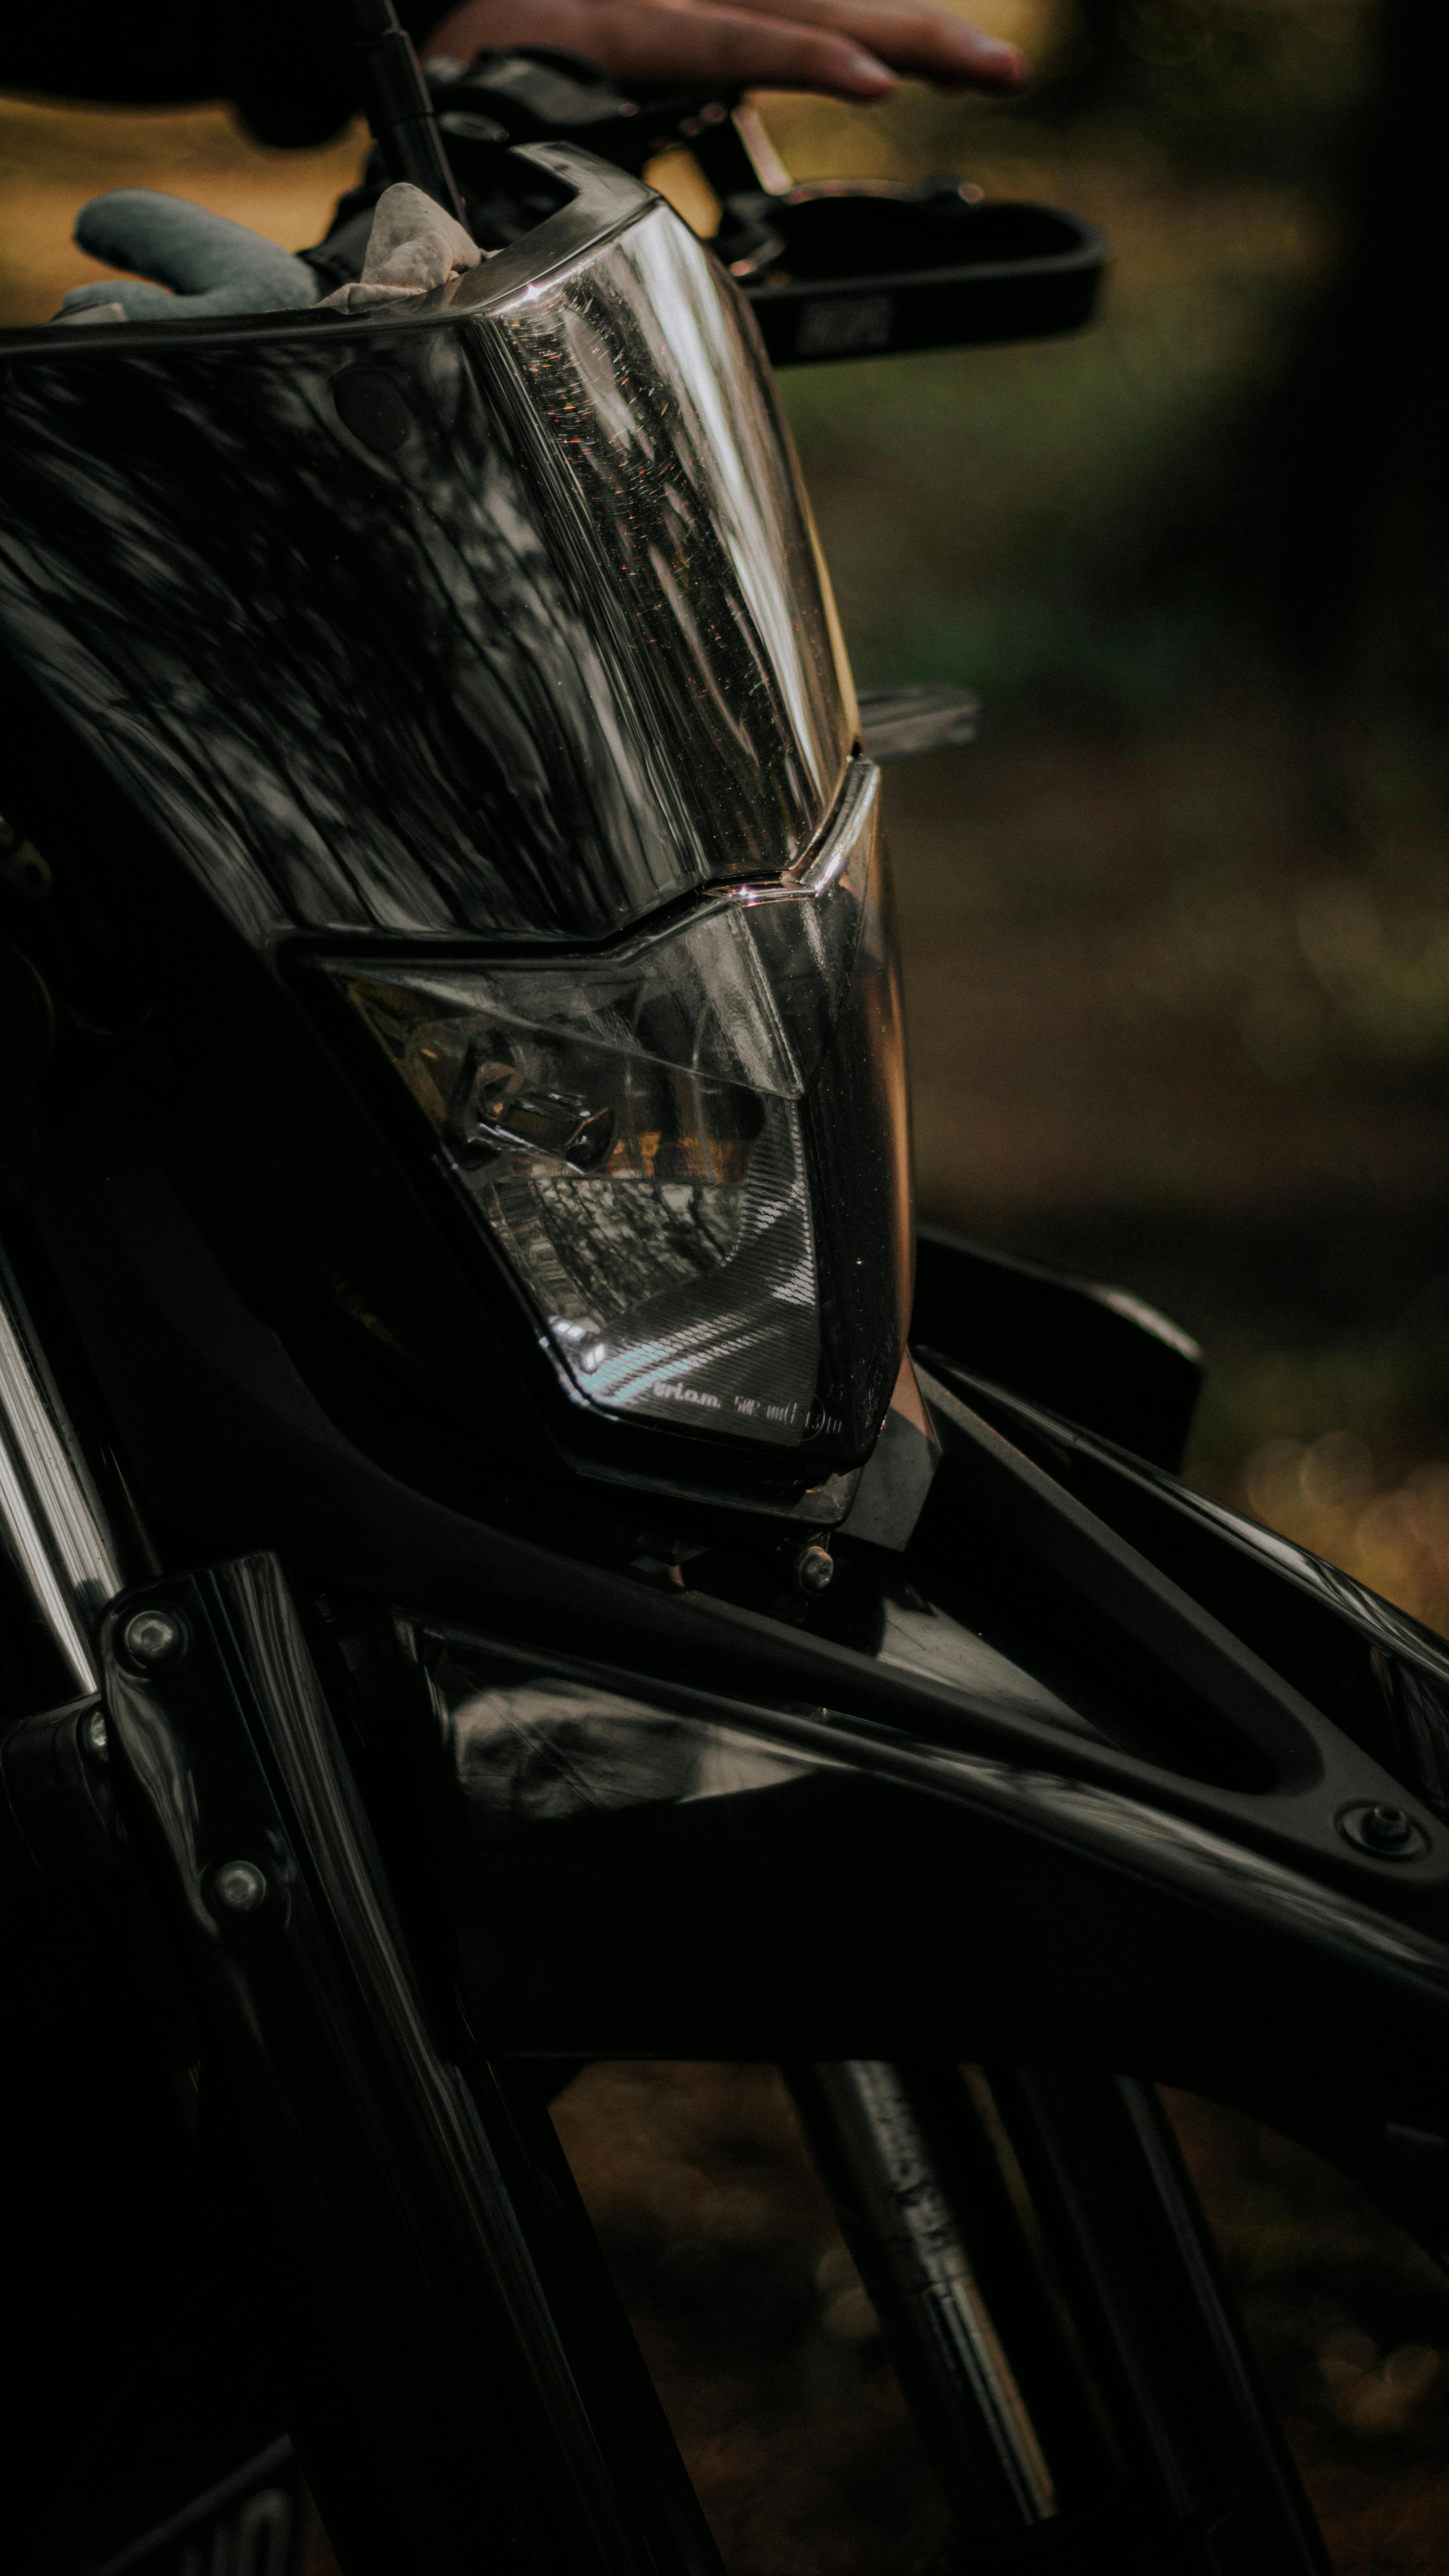 Headlight of Motorcycle · Free Stock Photo